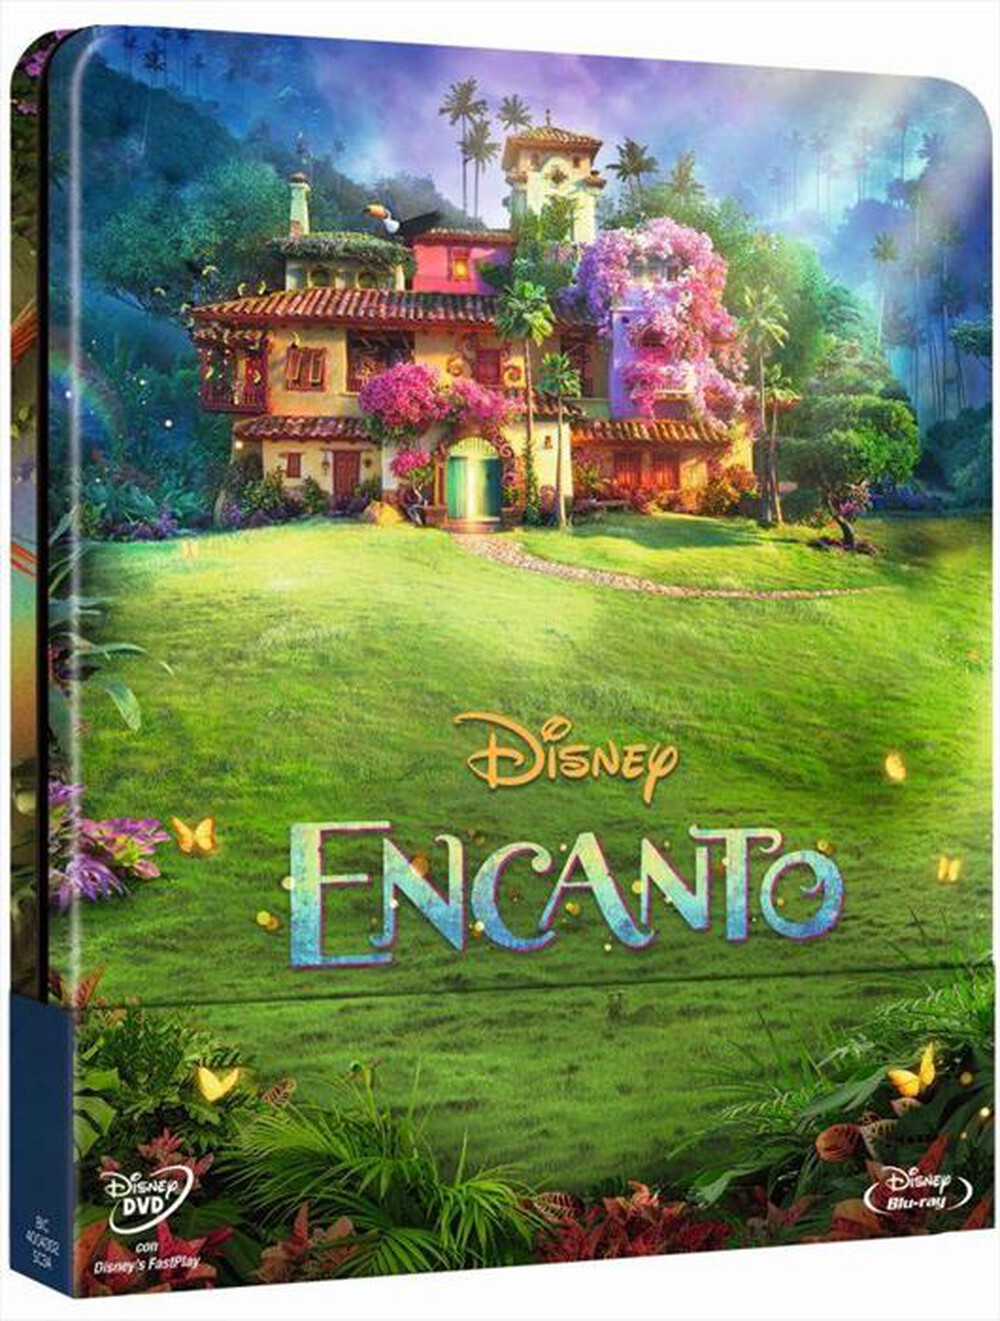 "WALT DISNEY - Encanto (Blu-Ray+Dvd) (Ltd Steelbook)"